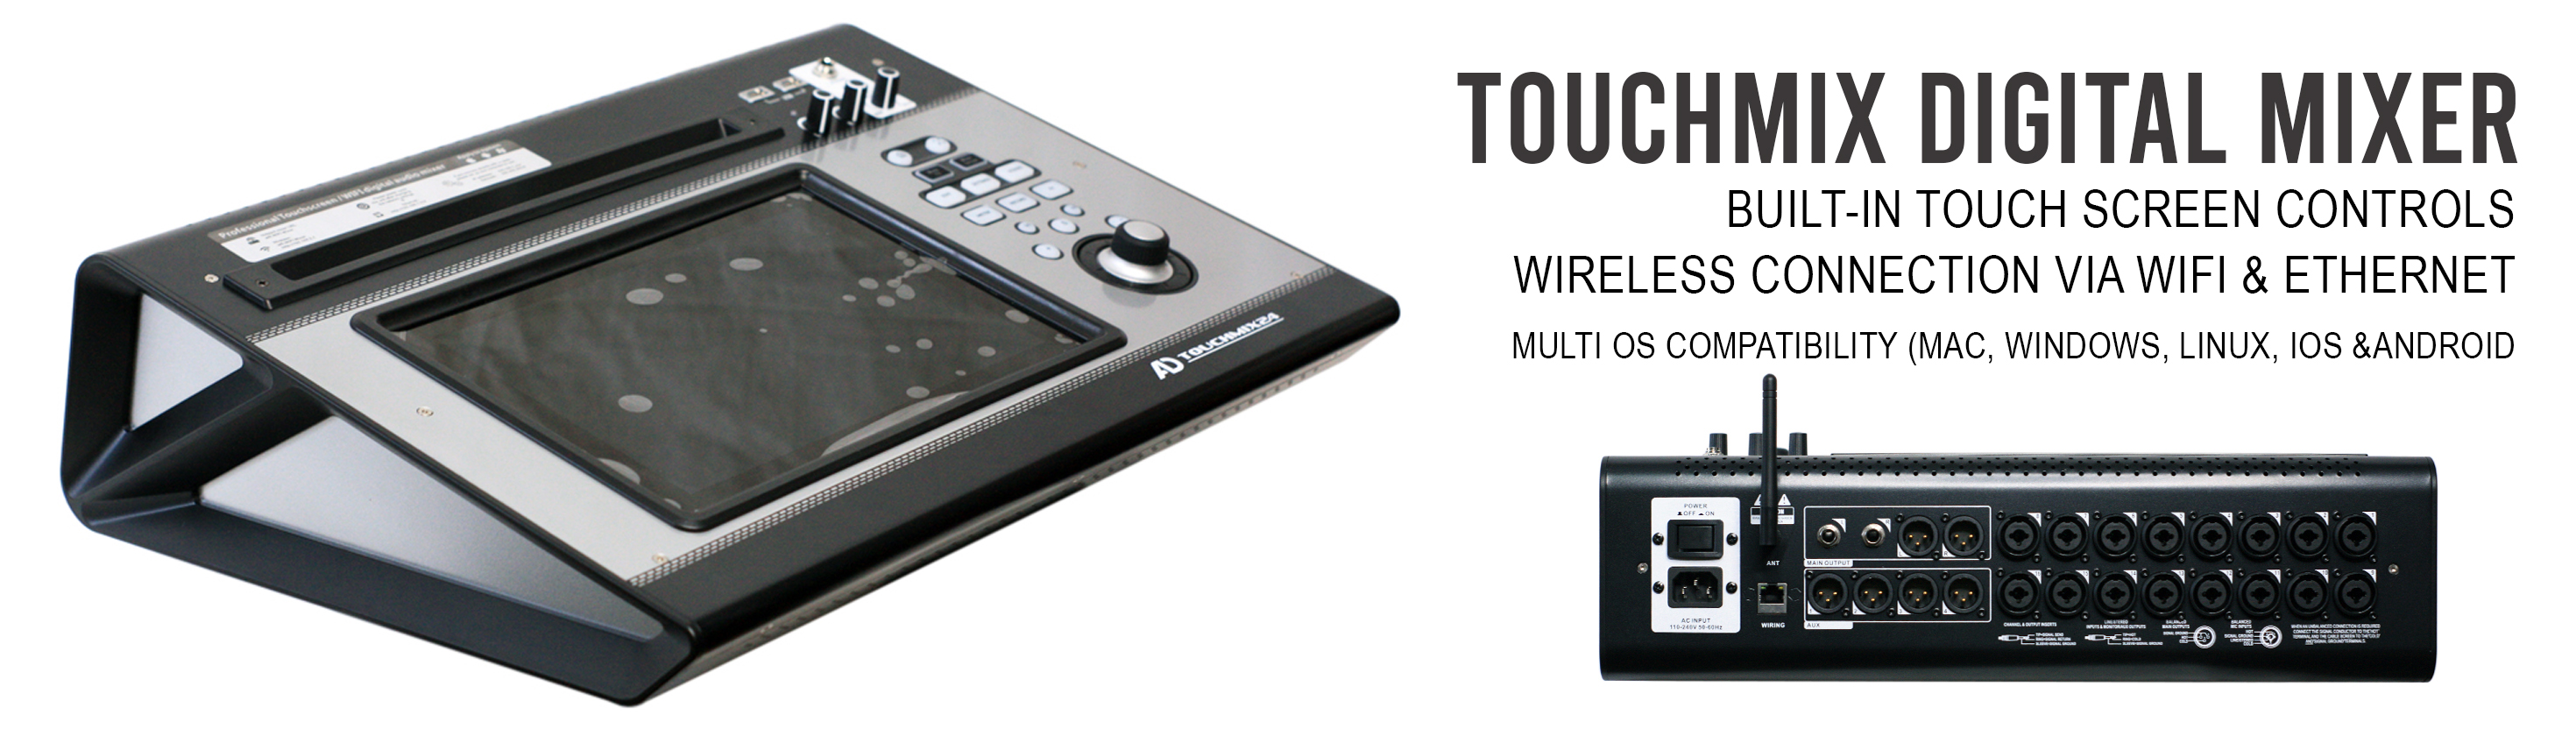 Touchmix Digital Mixer